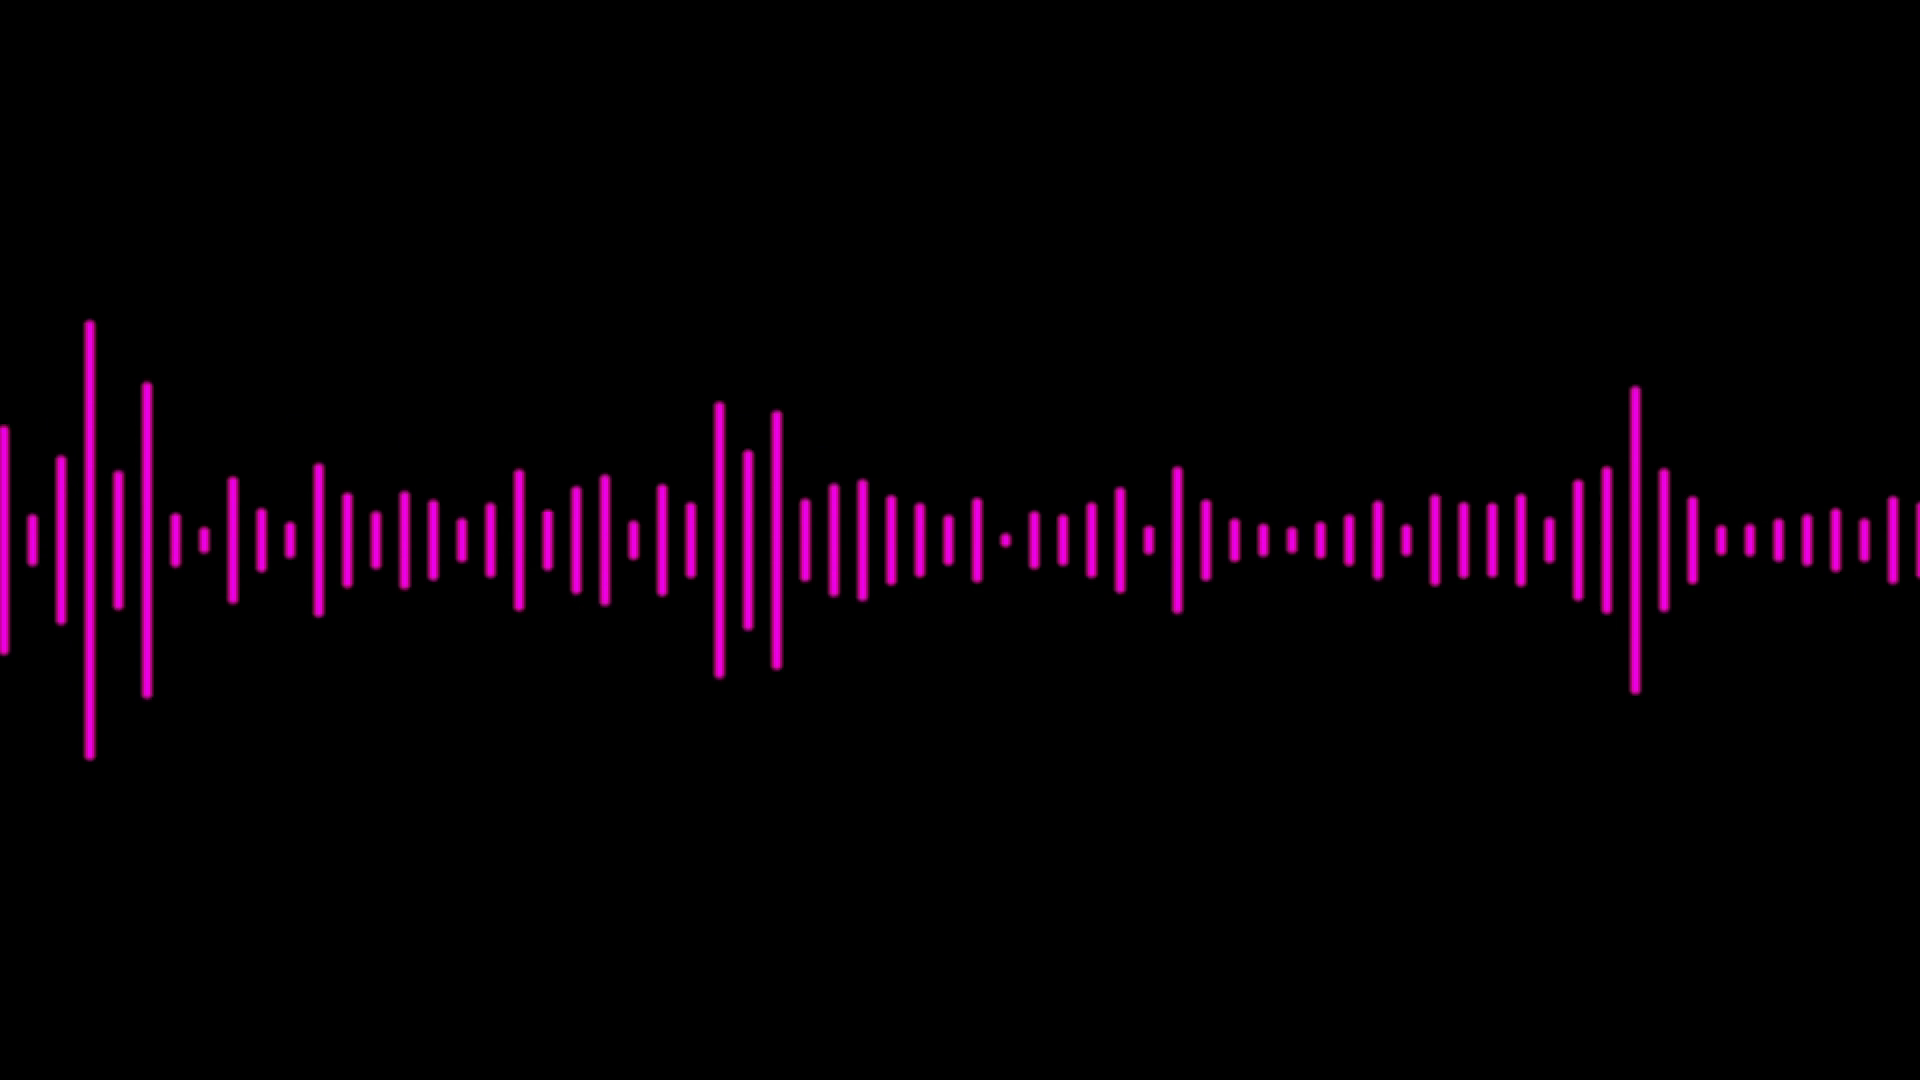 General 1920x1080 black background minimalism digital art simple background purple lines music sound sound wave